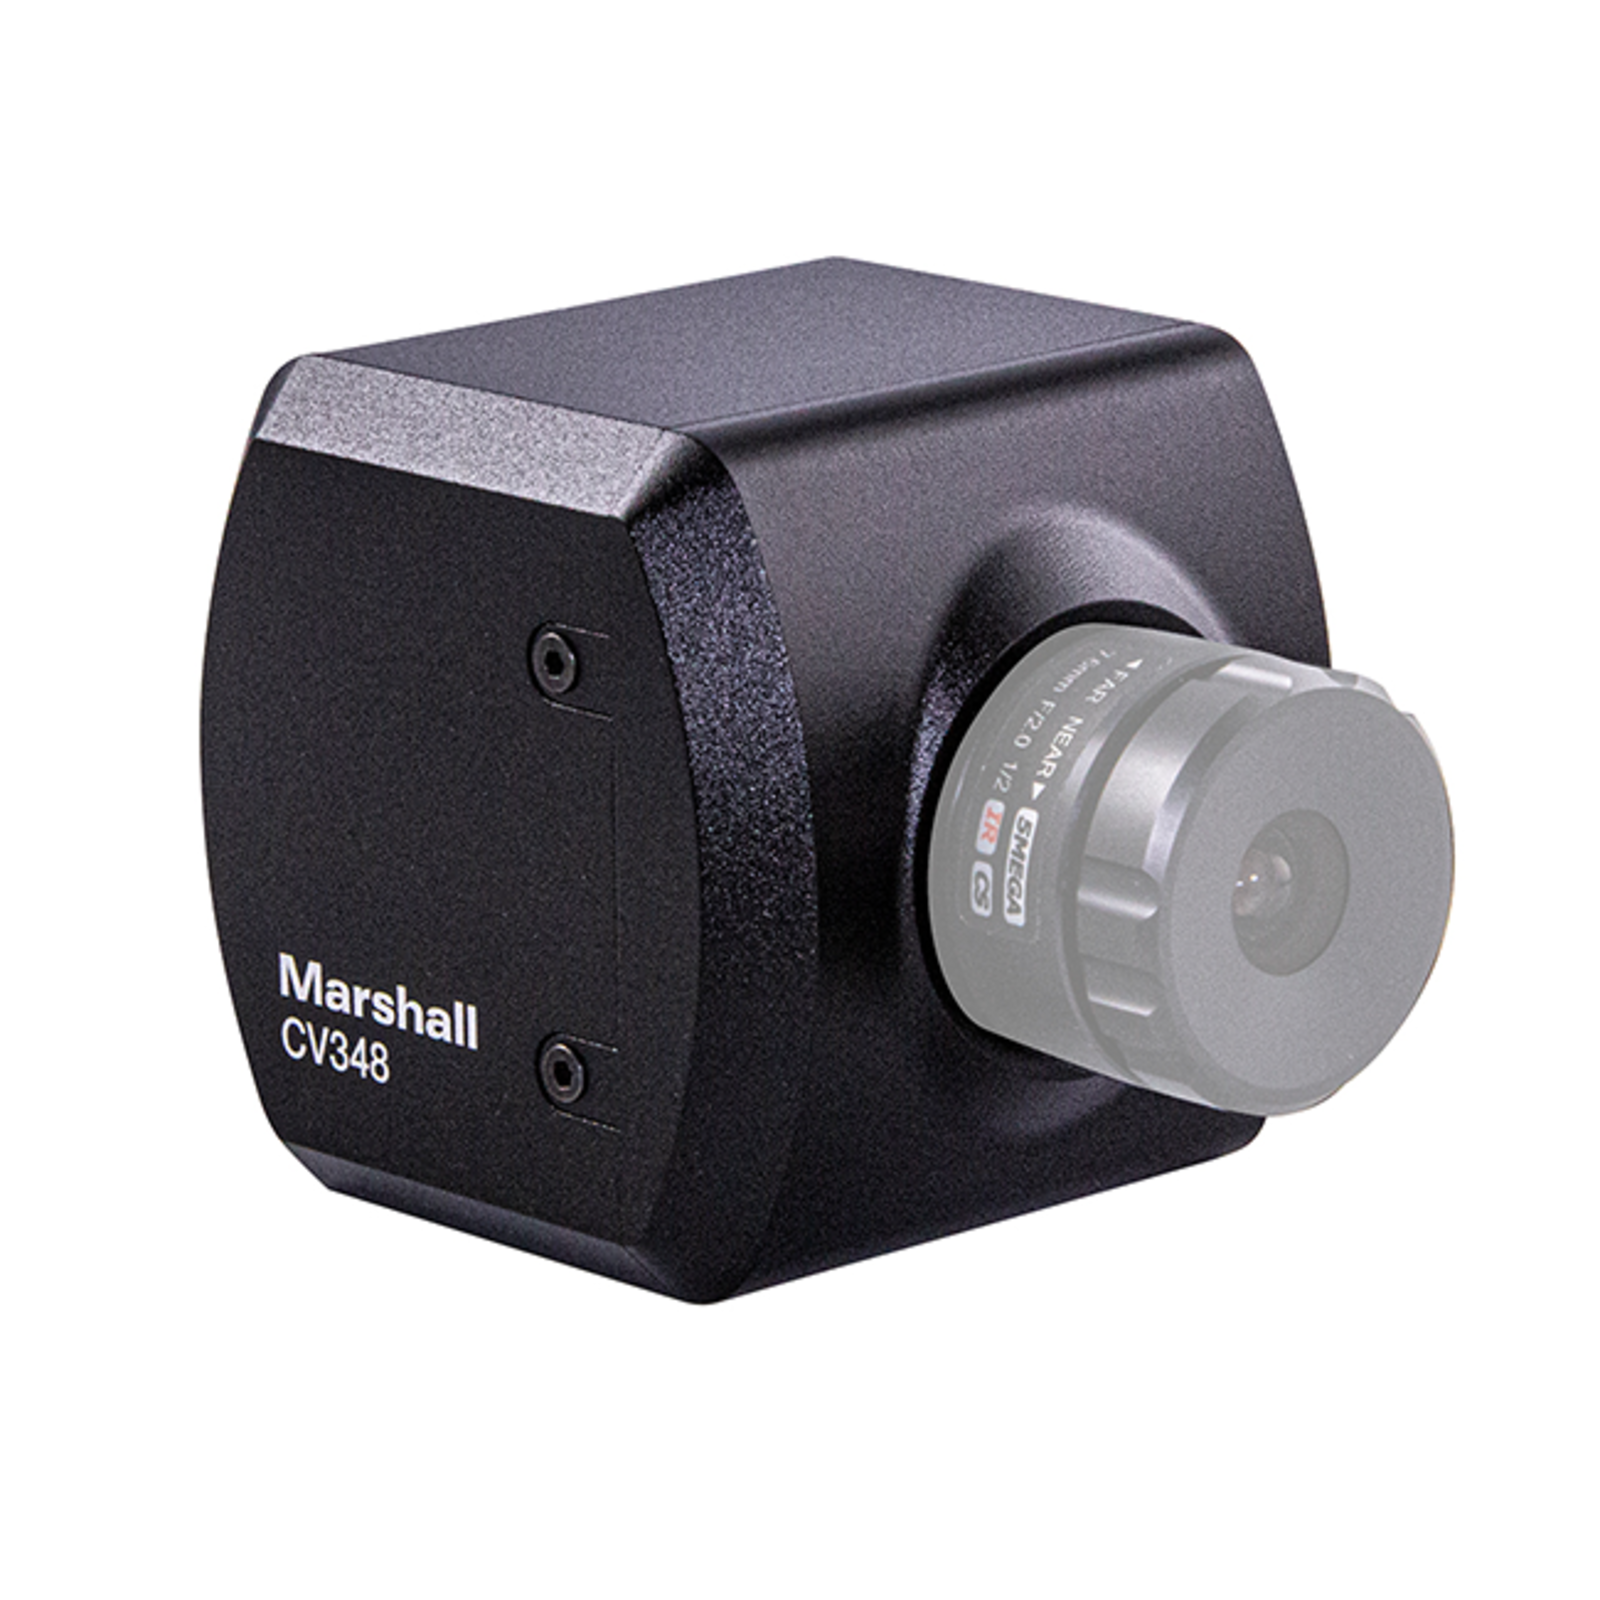 Marshall Compact Broadcast Camera with CS Lens Mount – 3G-SDI Output